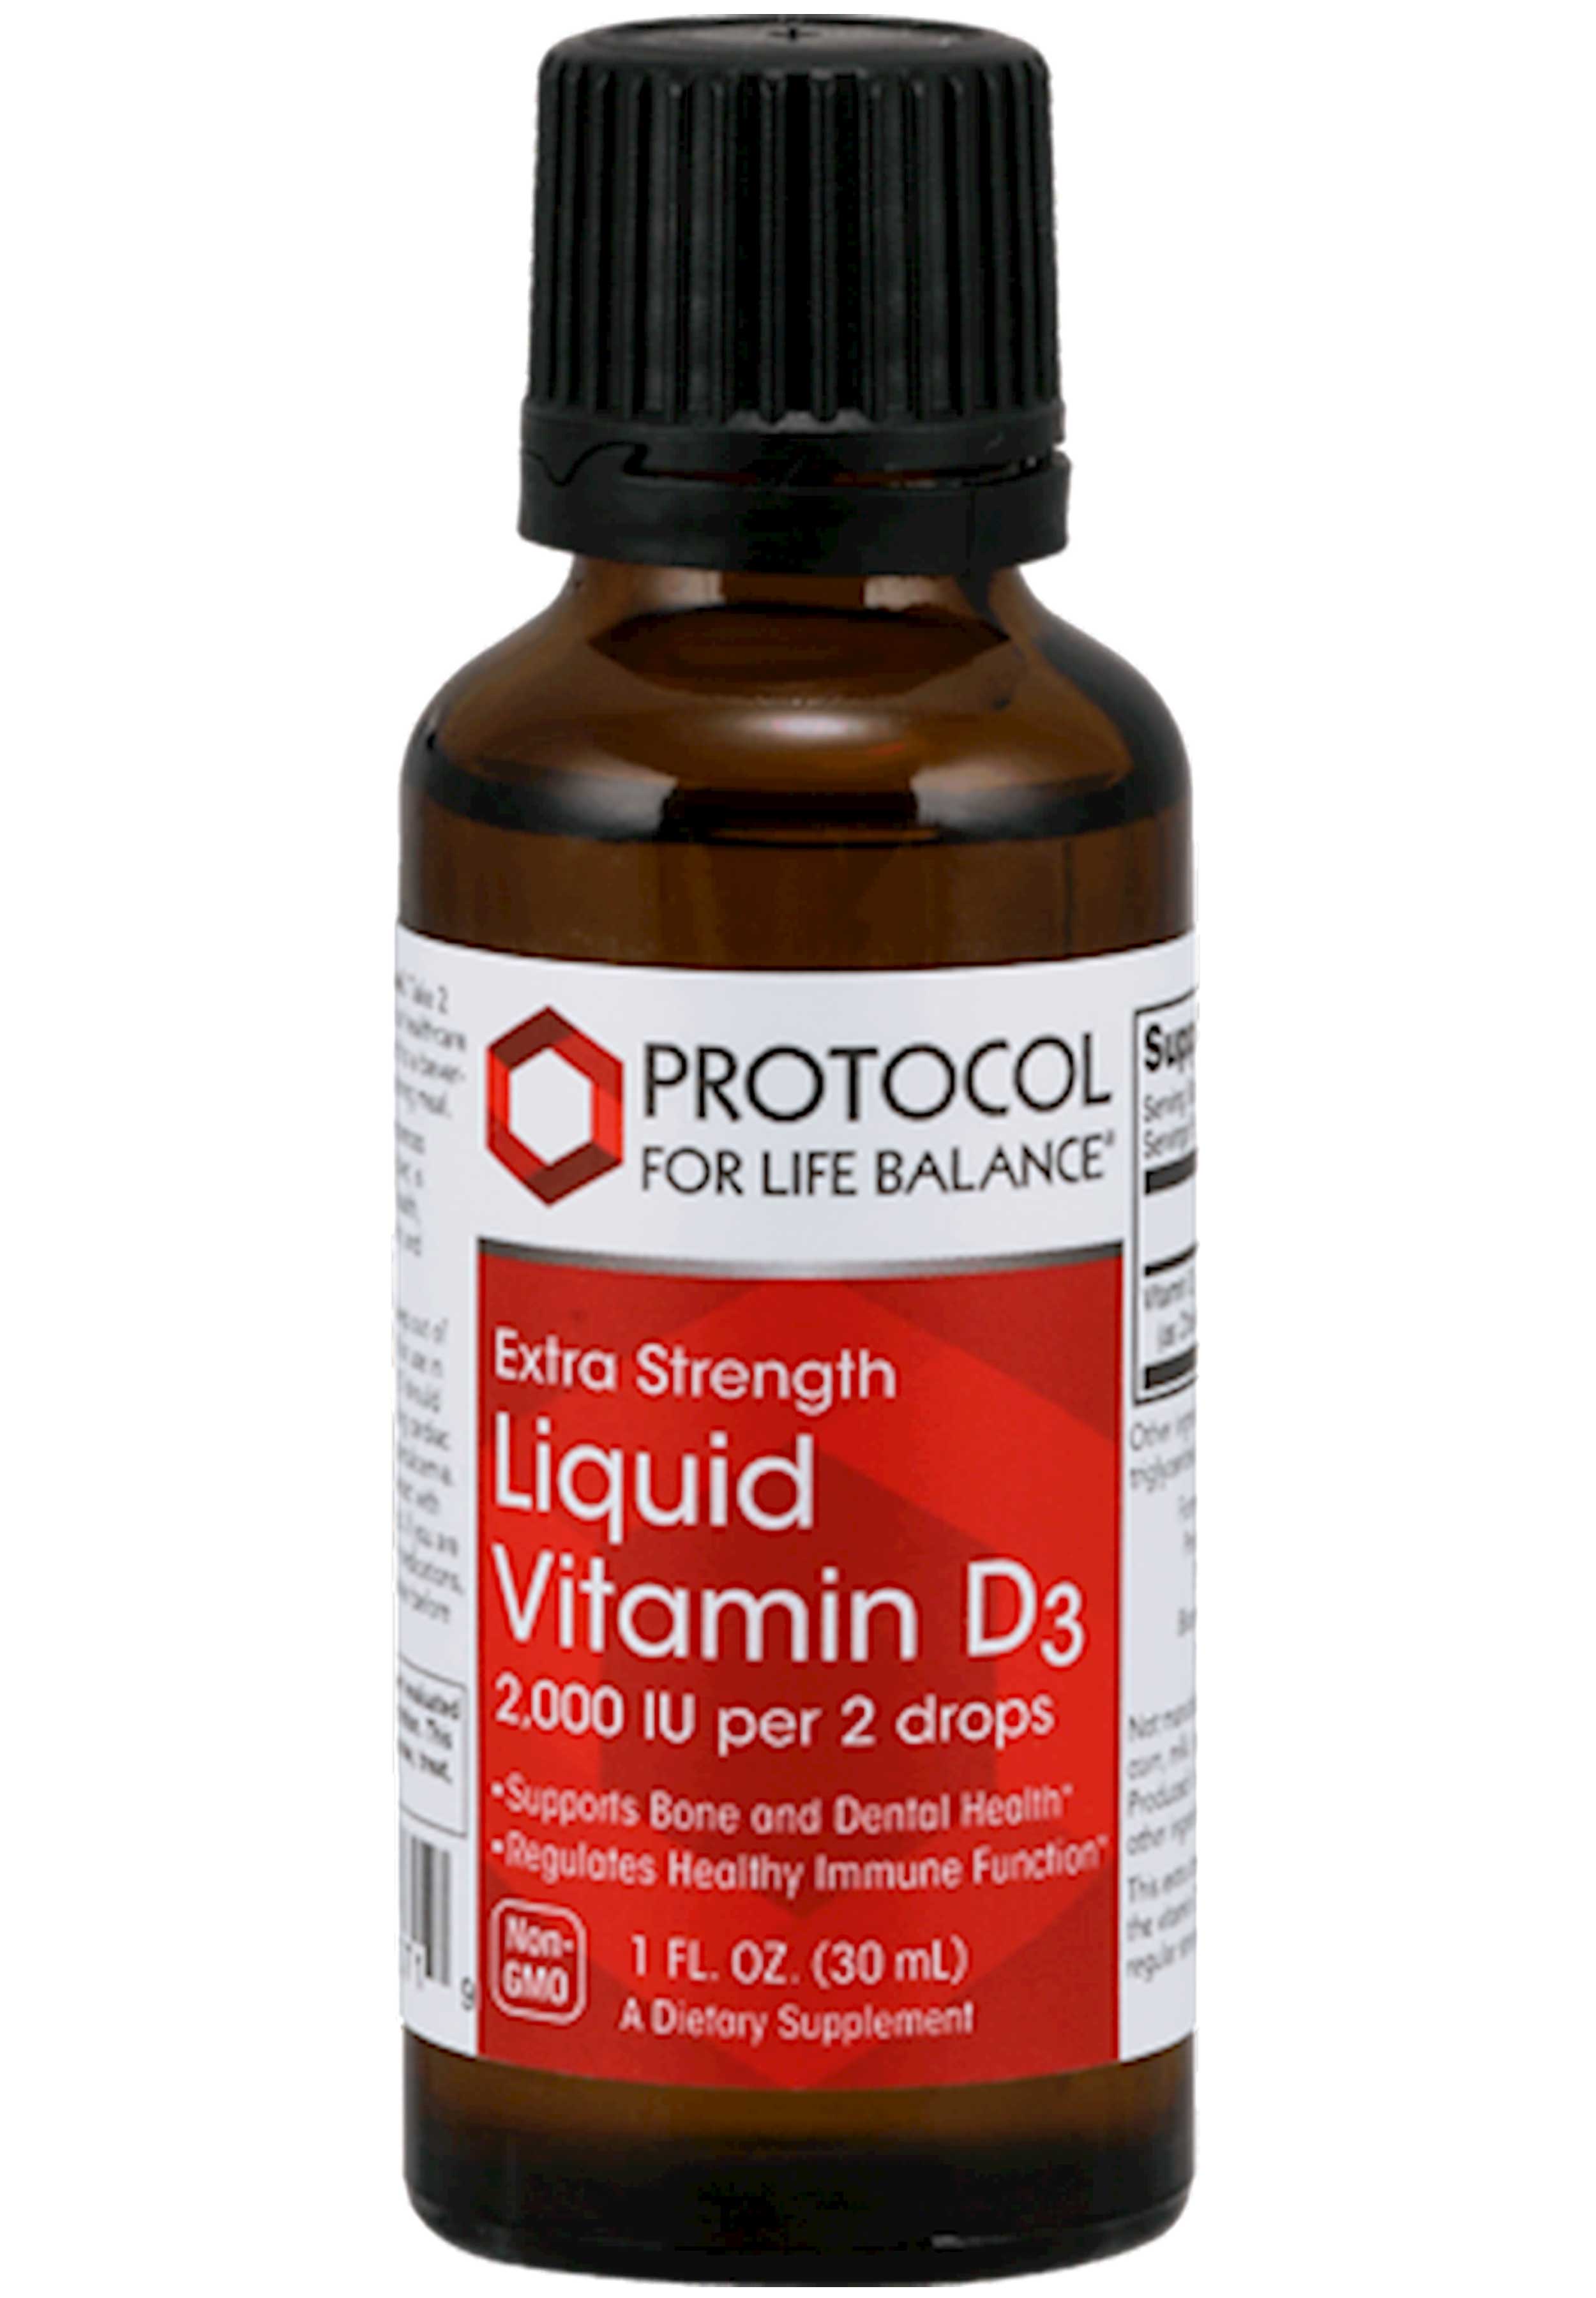 Protocol For Life Balance Liquid Vitamin D3 2,000 IU